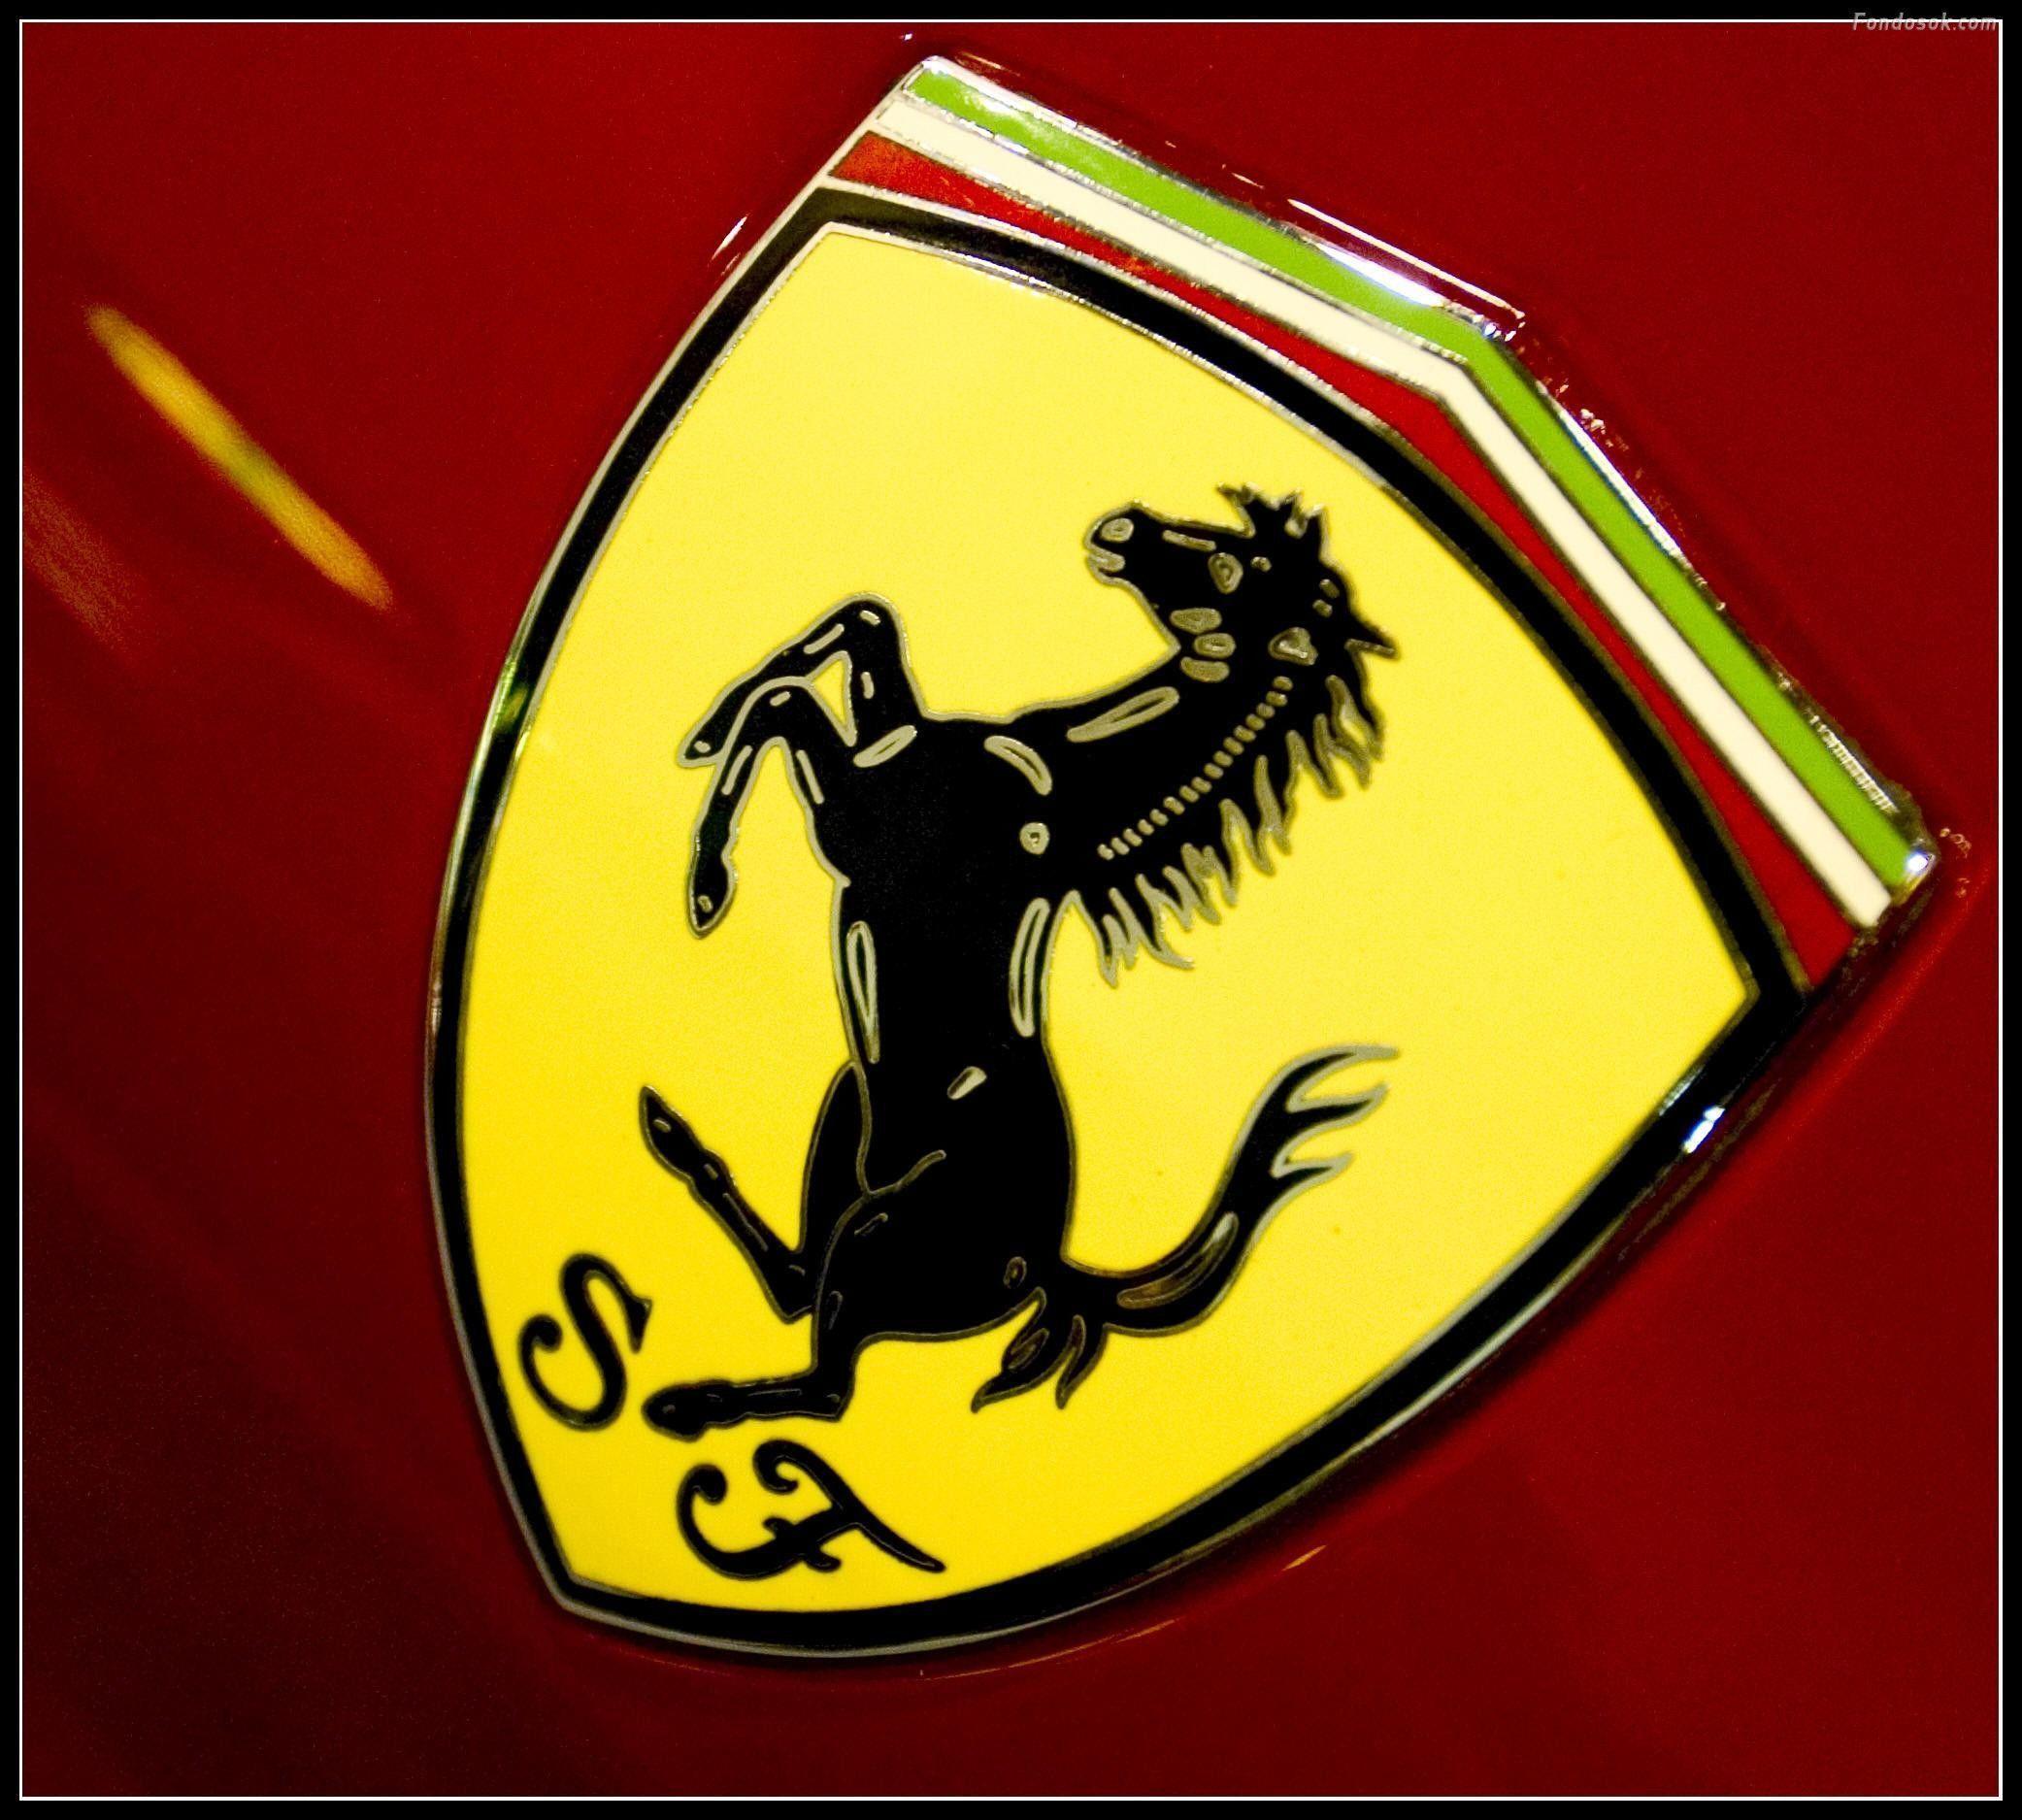 Ferrari Logo 114 44151 Image HD Wallpaper. Wallfoy.com